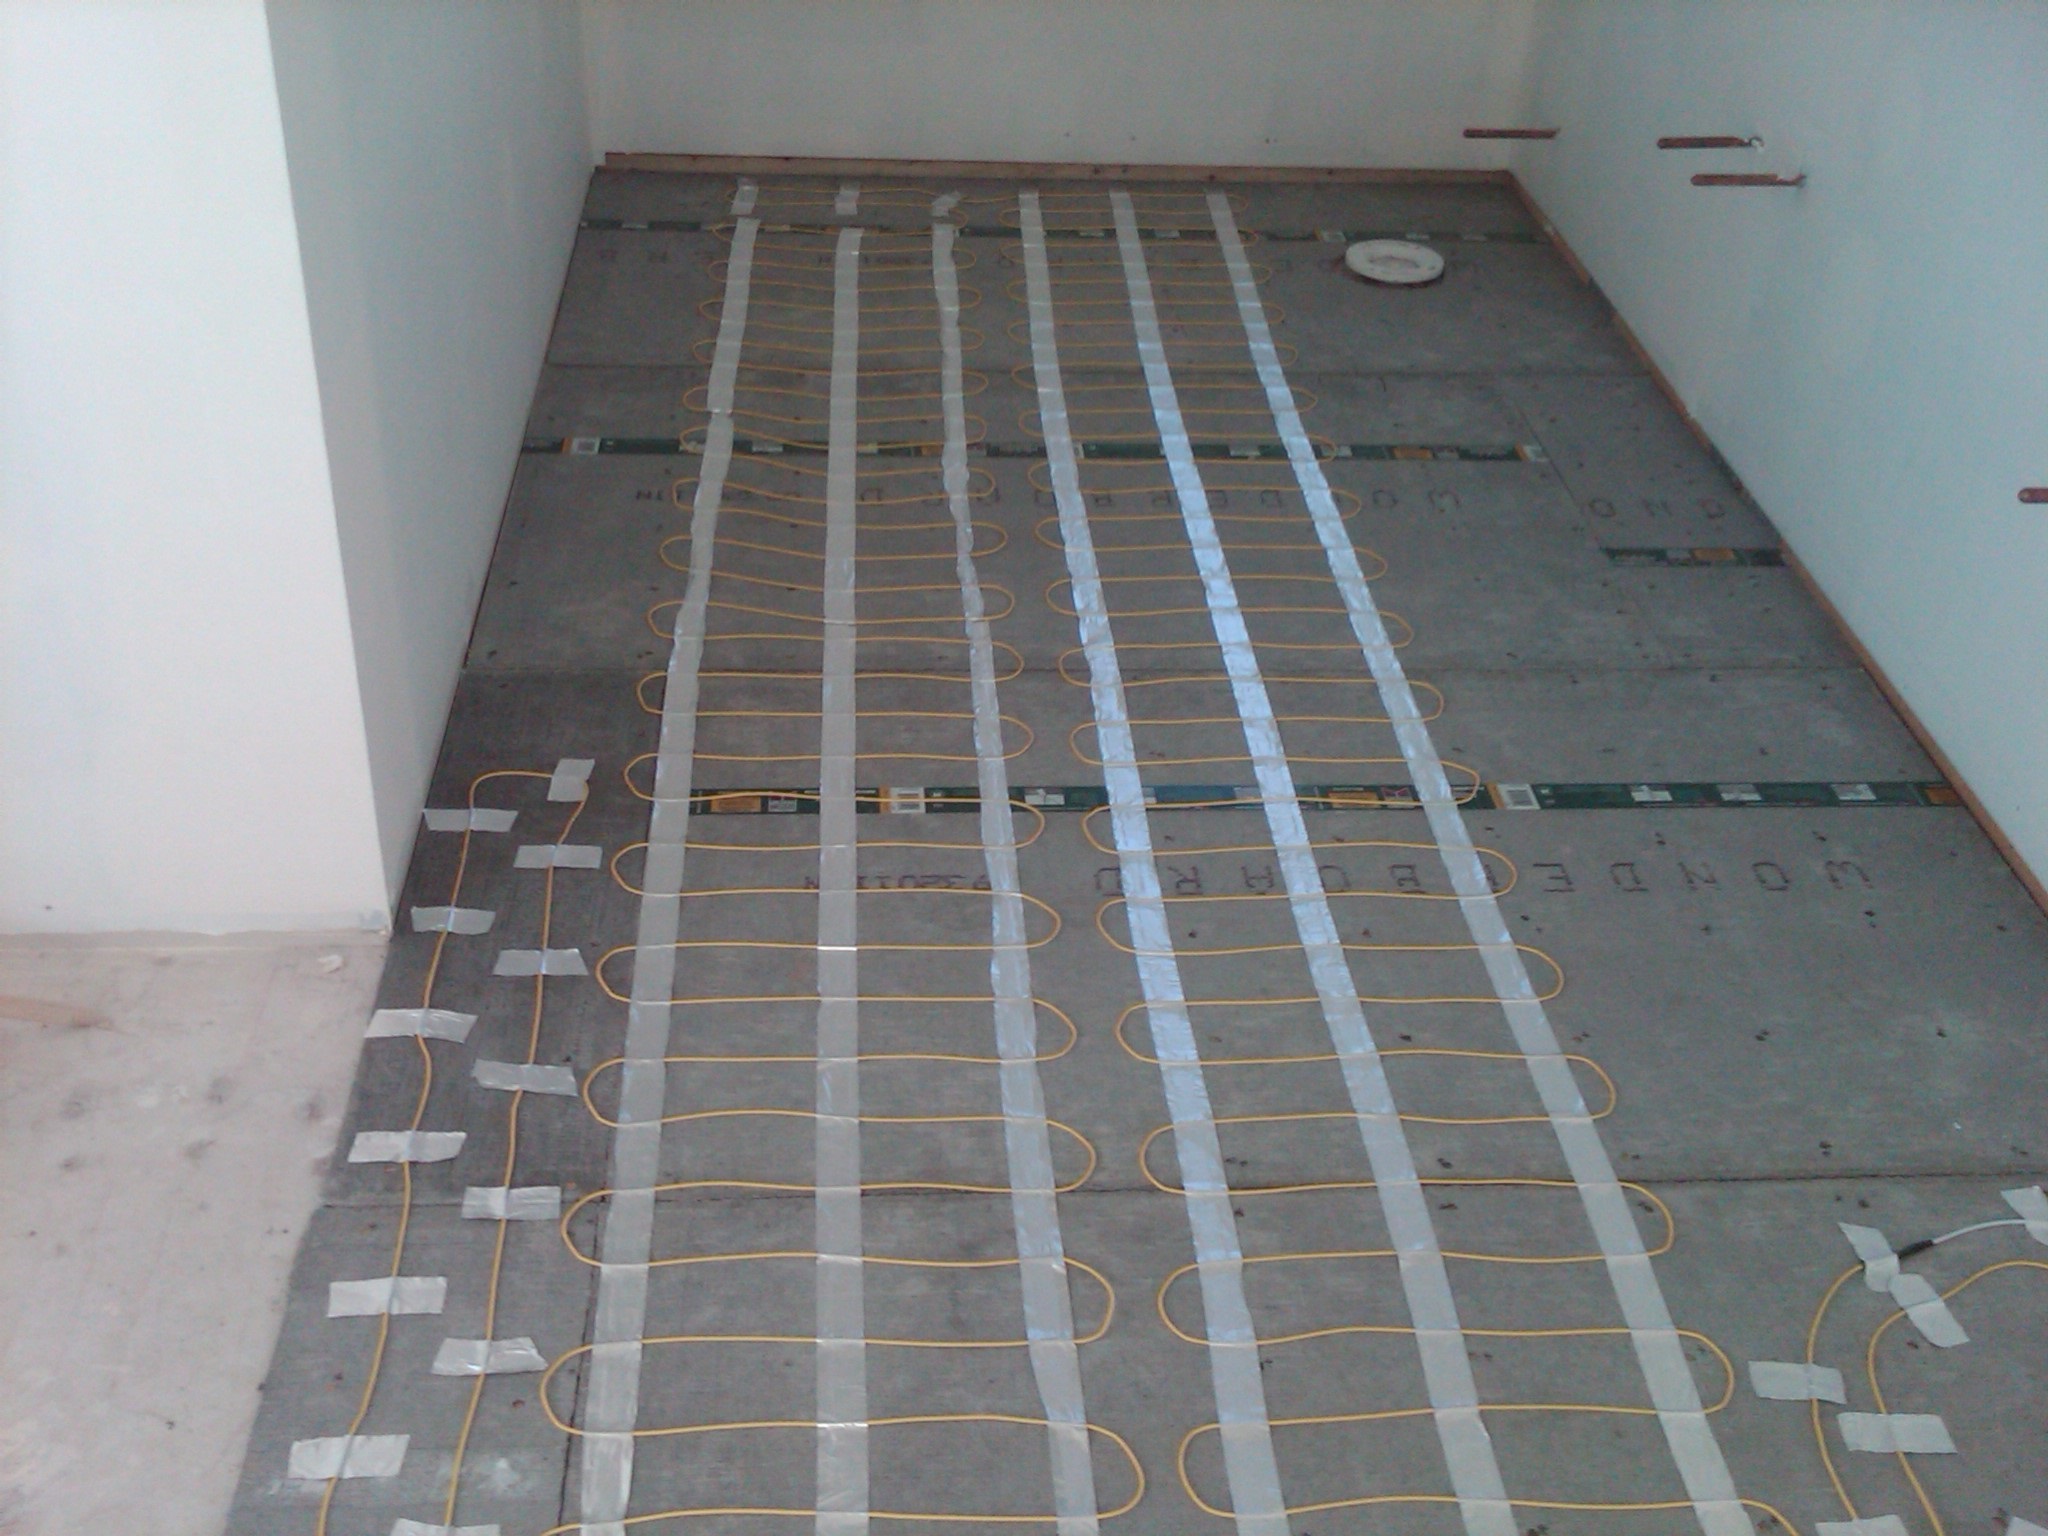 Heated floor mats Crosse wi